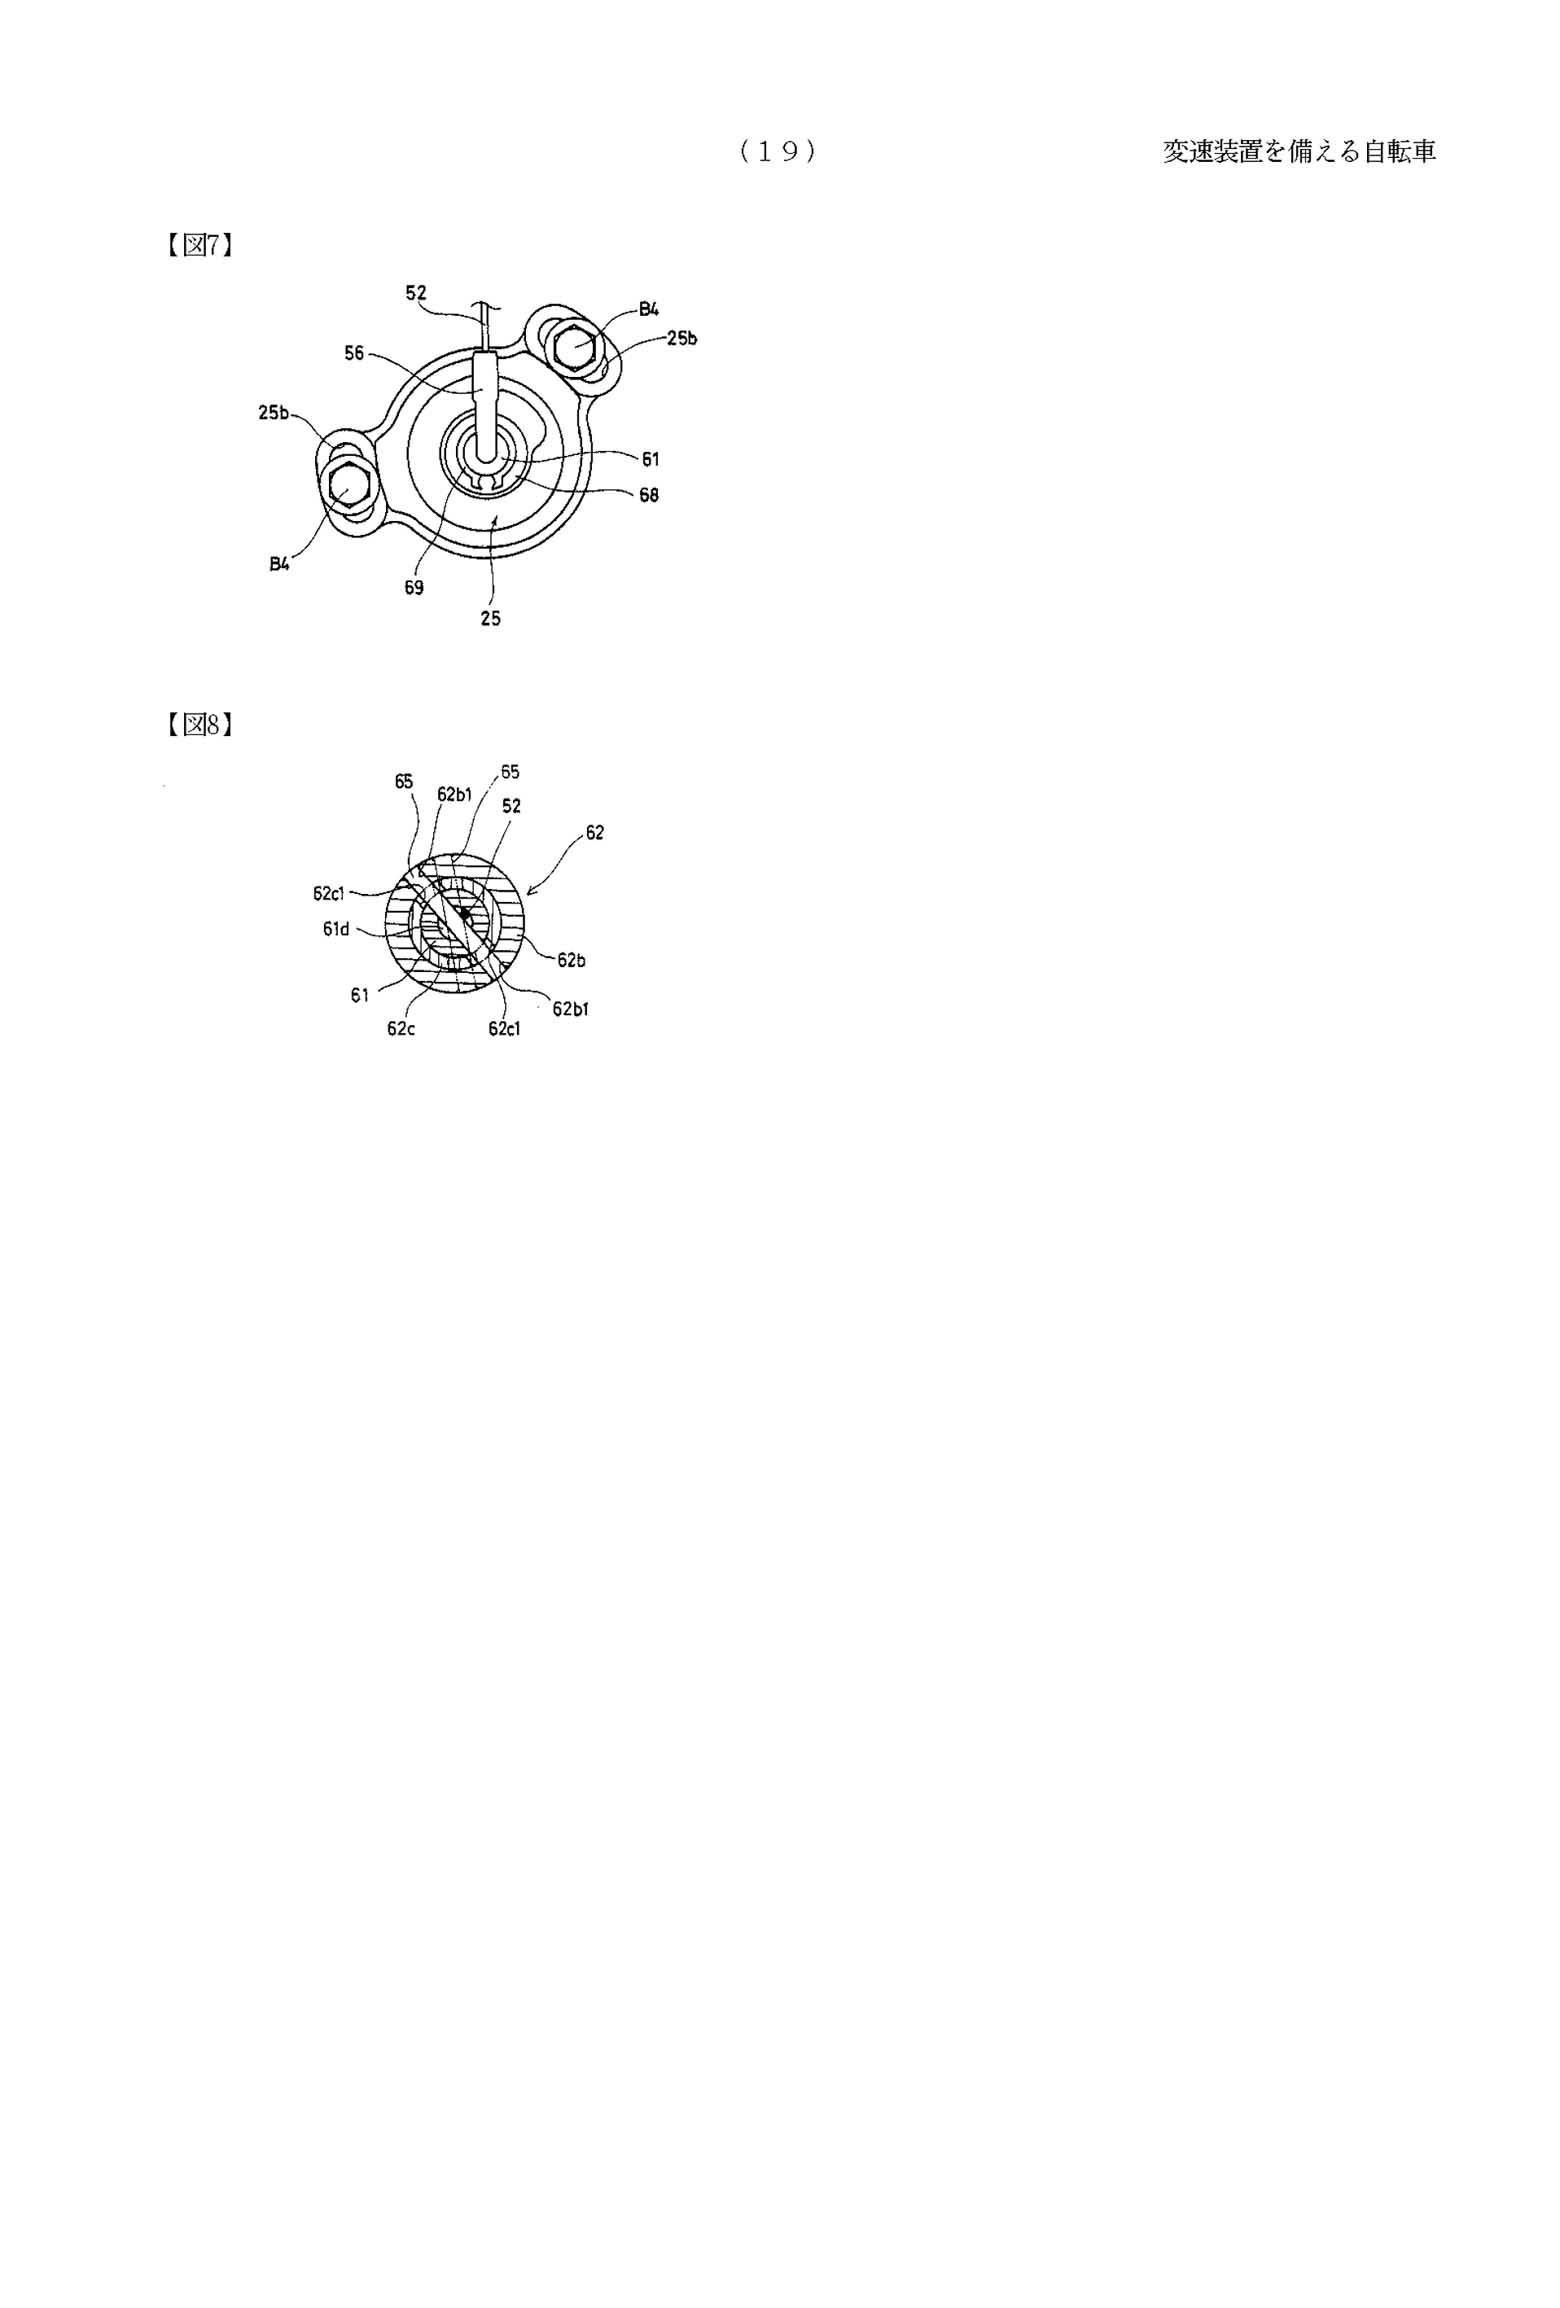 Japanese Patent 4260068 - Honda page 19 main image